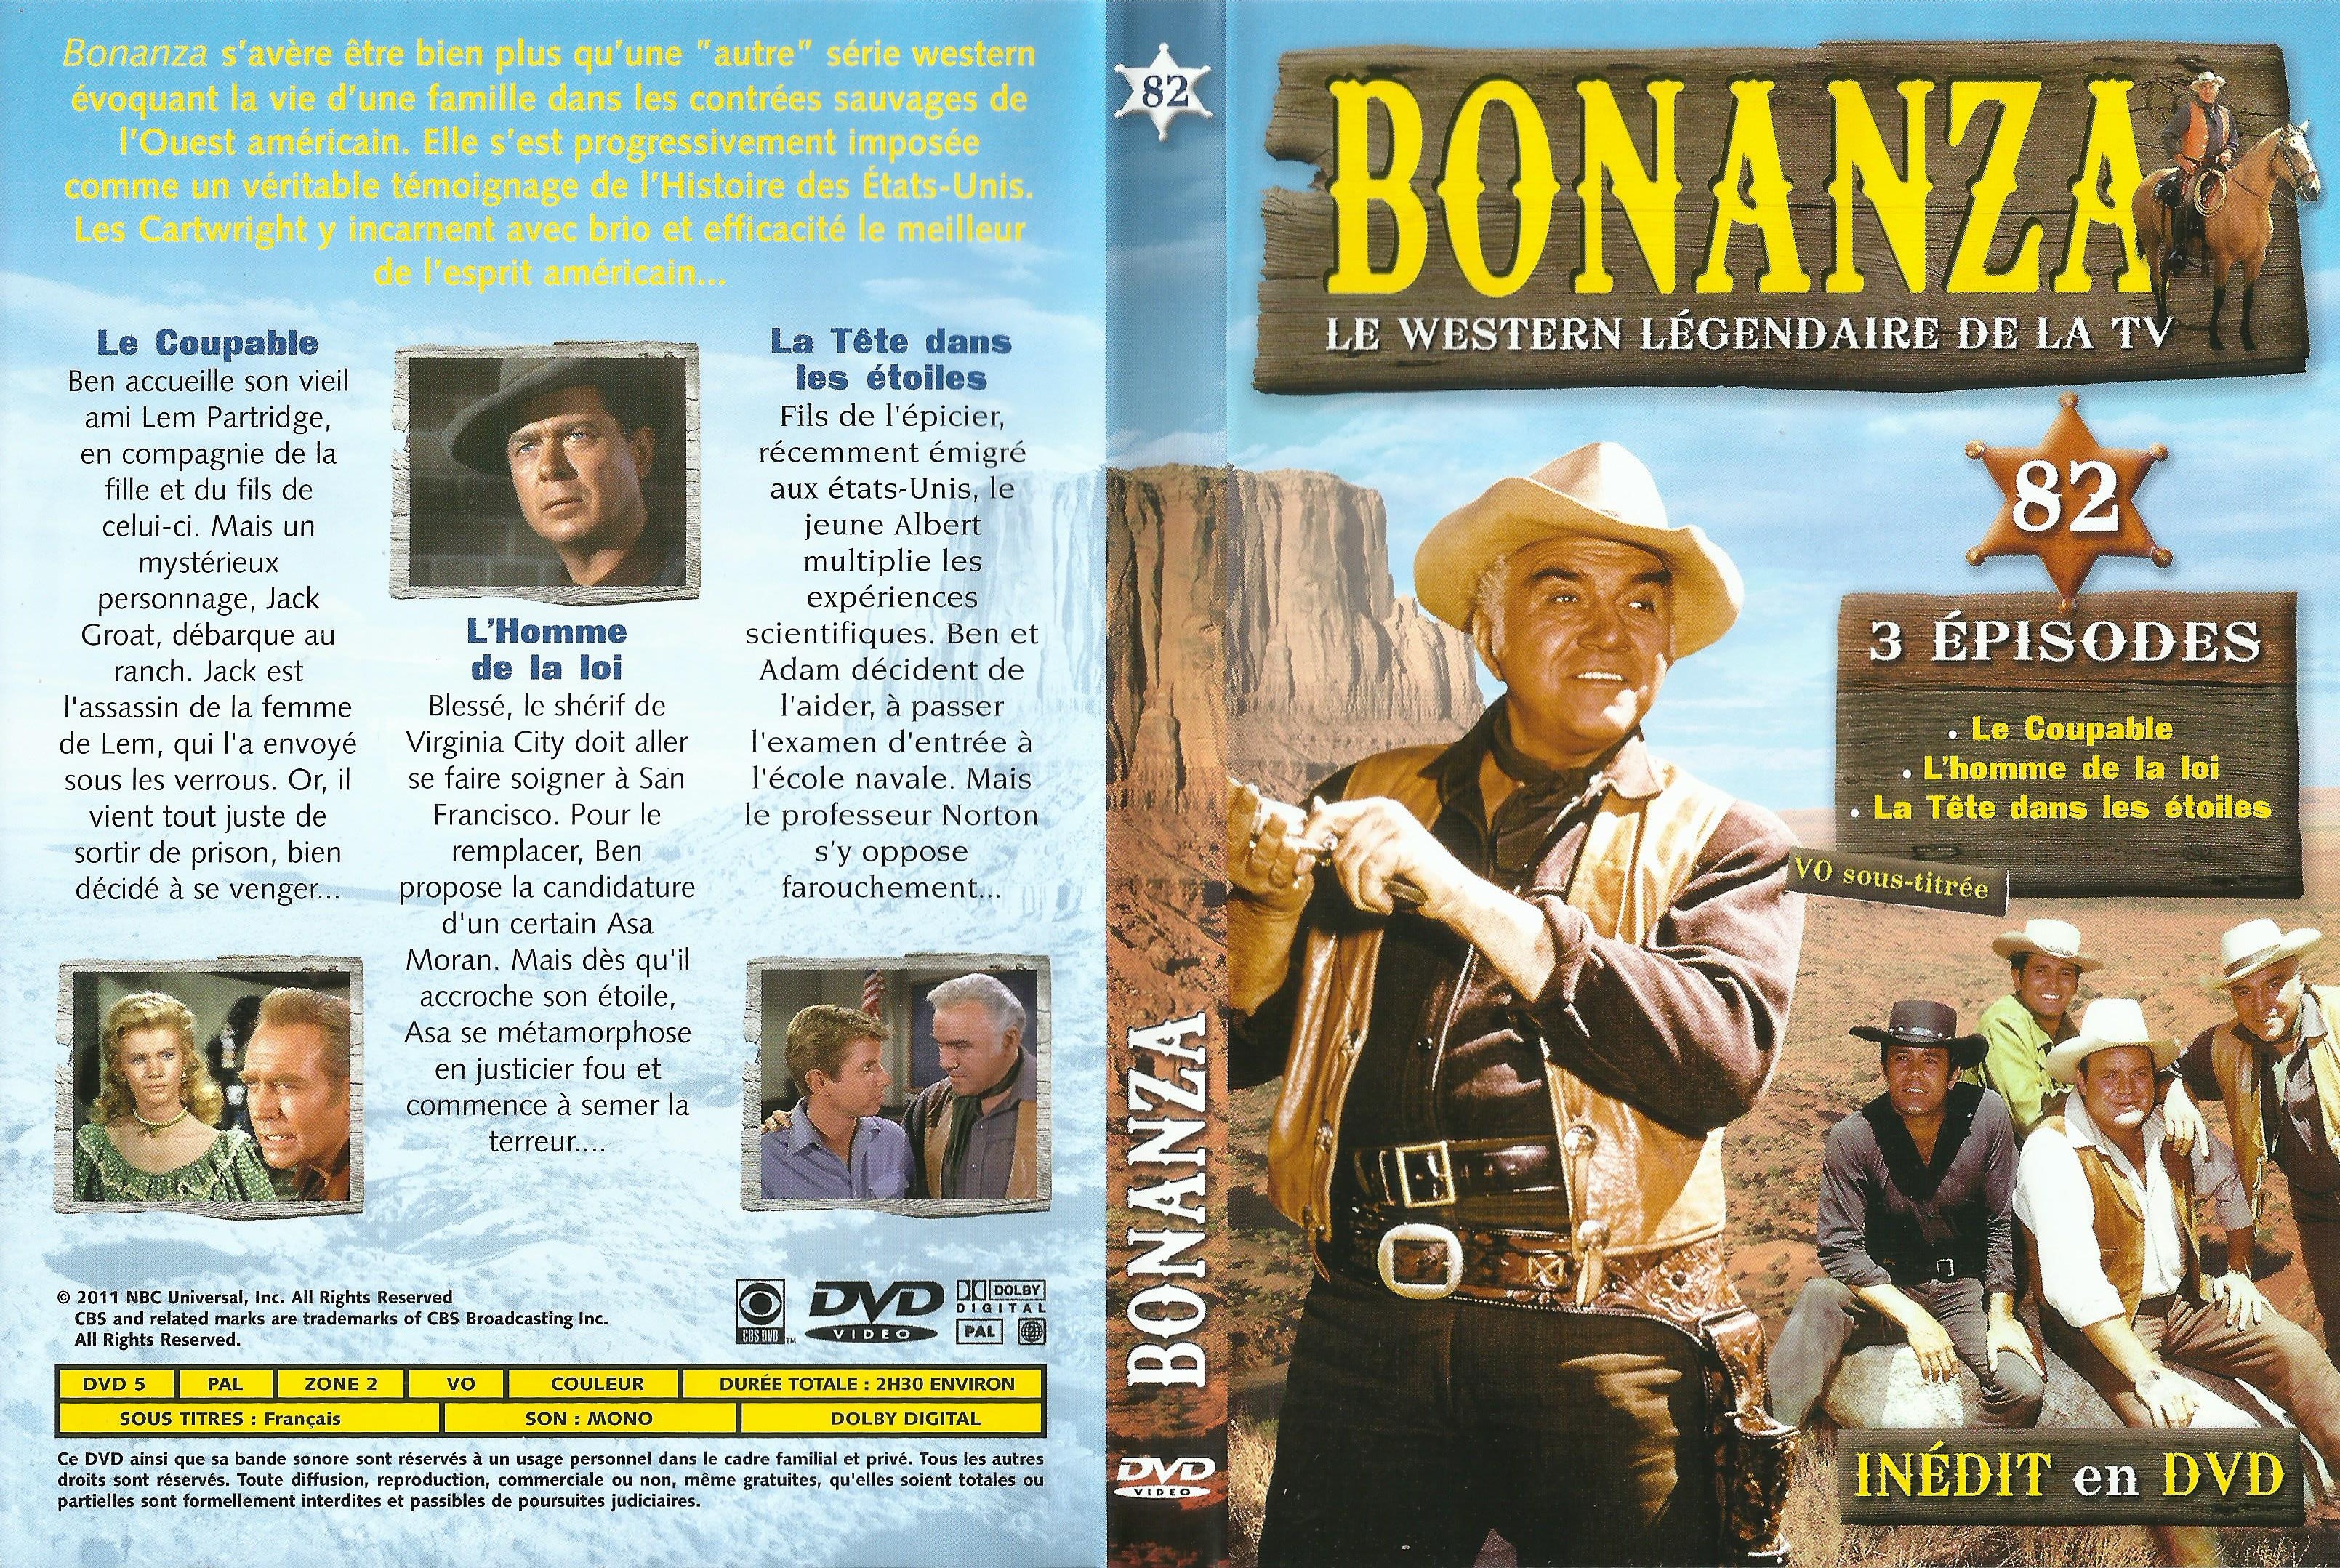 Jaquette DVD Bonanza vol 82